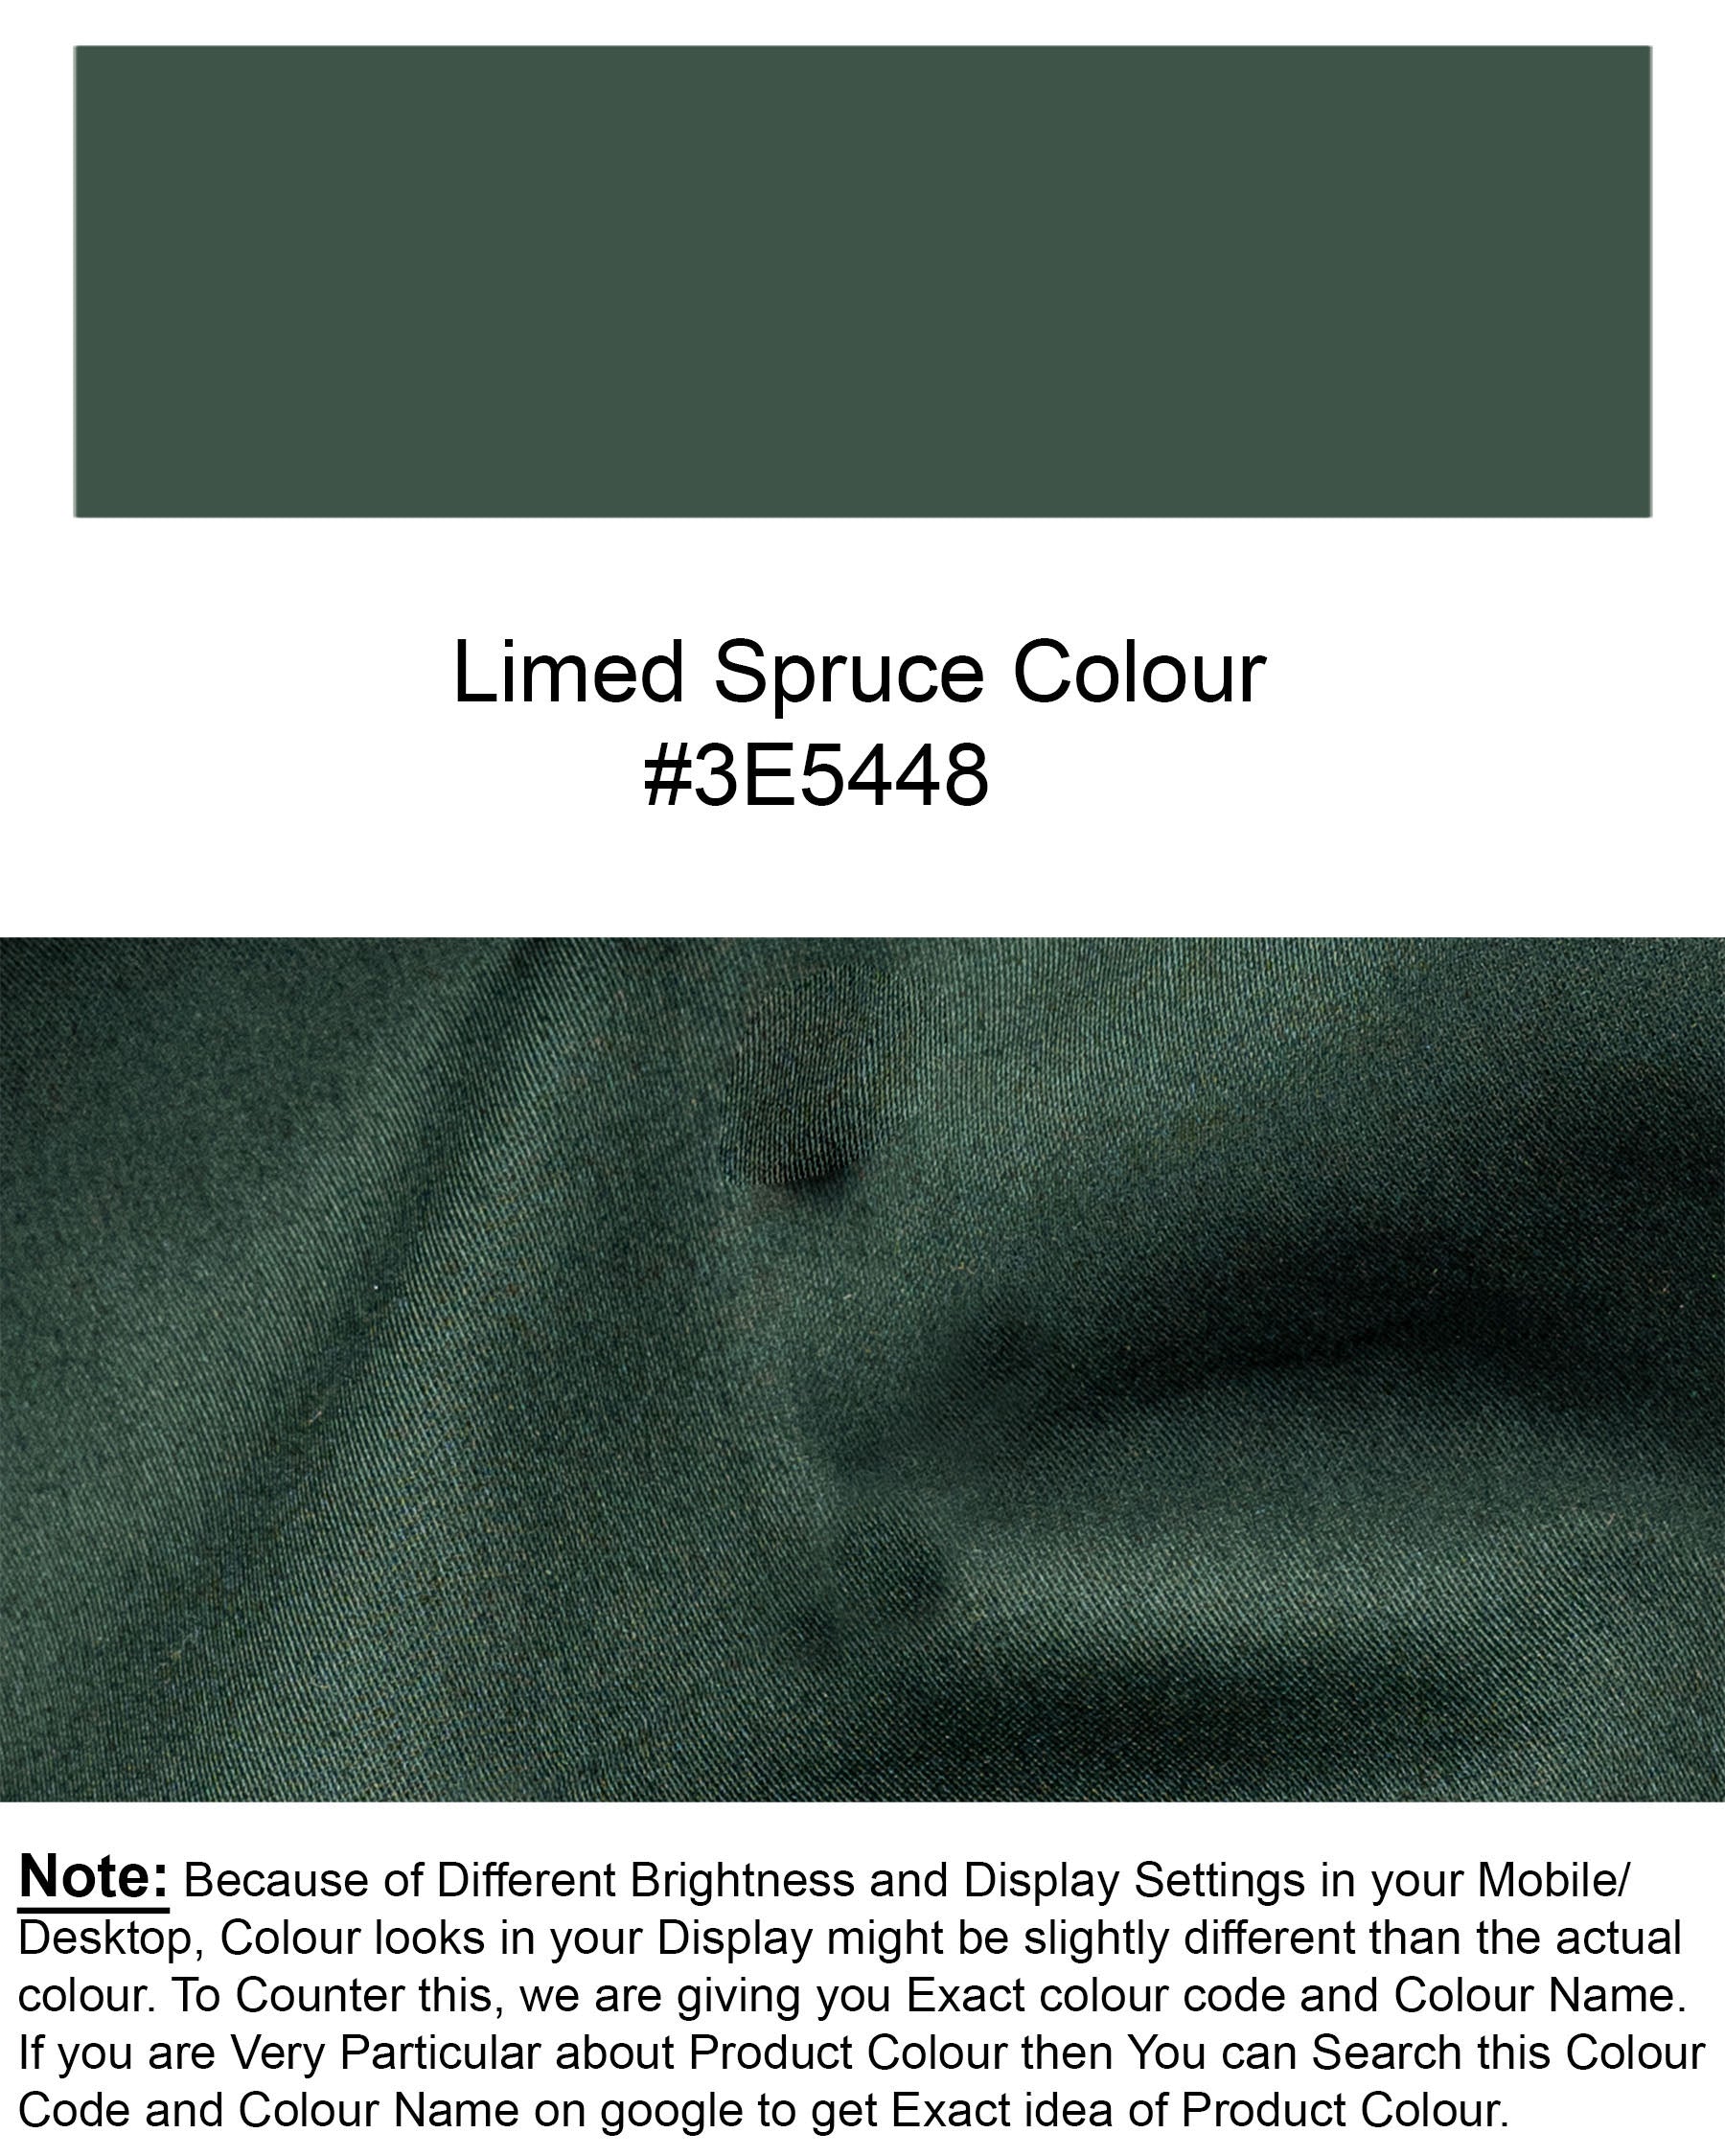 Limed Spruce Green Dotted Super Soft Premium Cotton Shirt 6871-M-38, 6871-M-H-38, 6871-M-39, 6871-M-H-39, 6871-M-40, 6871-M-H-40, 6871-M-42, 6871-M-H-42, 6871-M-44, 6871-M-H-44, 6871-M-46, 6871-M-H-46, 6871-M-48, 6871-M-H-48, 6871-M-50, 6871-M-H-50, 6871-M-52, 6871-M-H-52